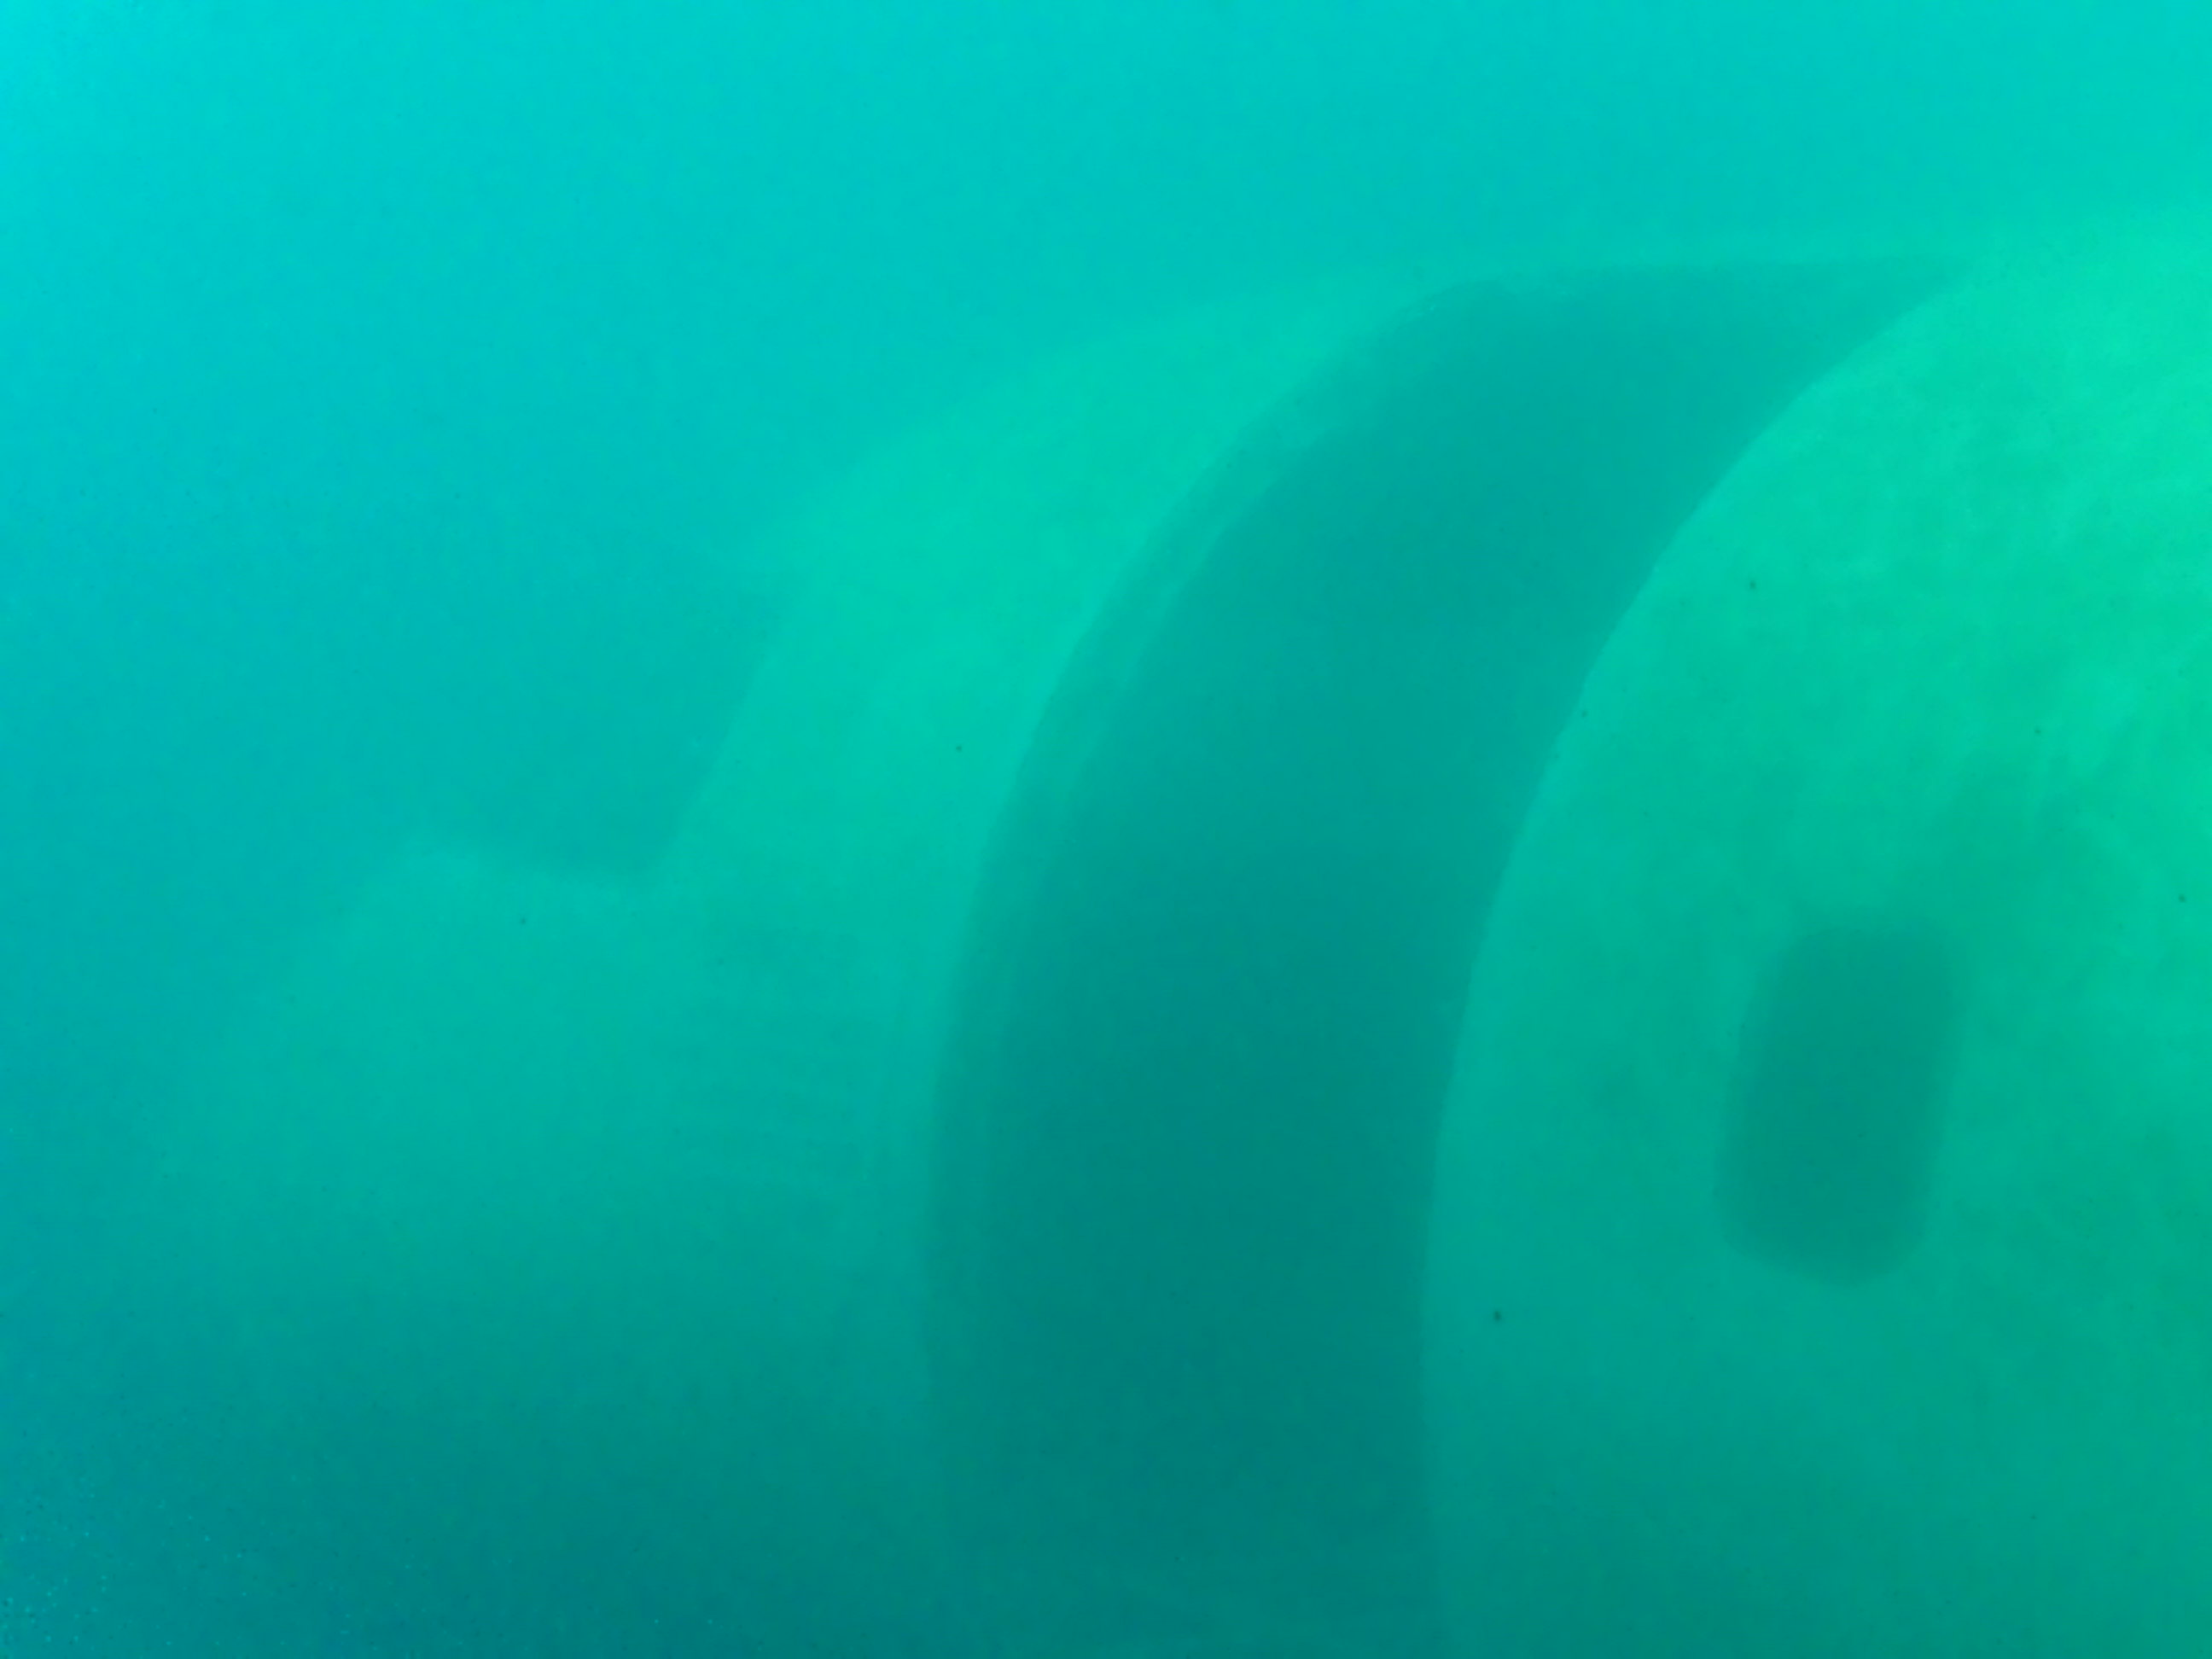 Underwater Plane at Dutch Springs